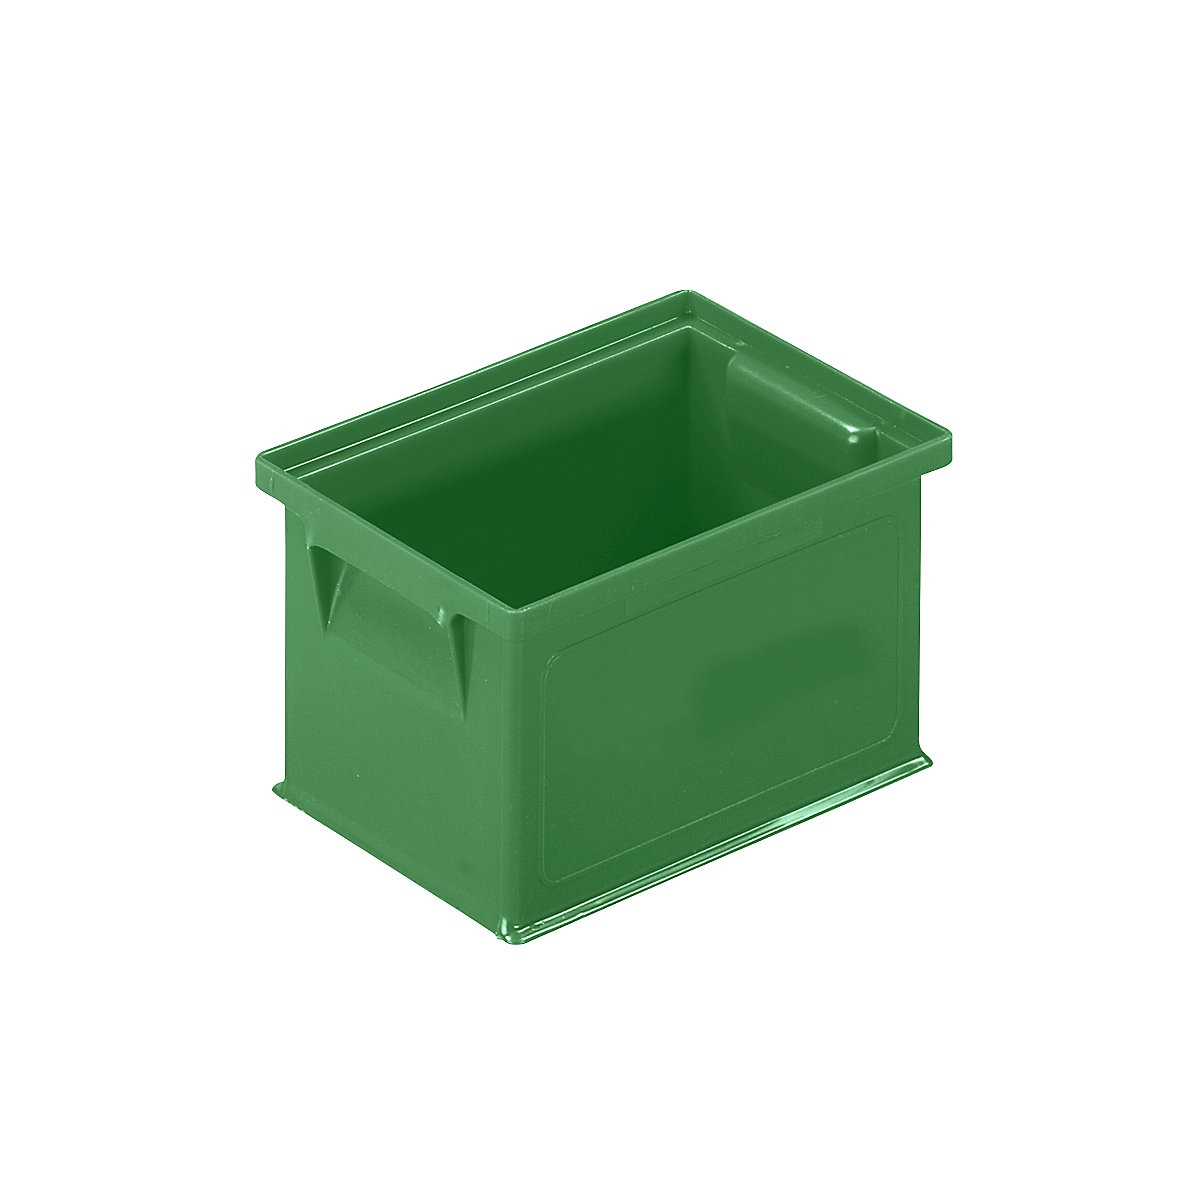 Cassa impilabile per trasporto, lungh. x largh. x alt. 210 x 150 x 122,5 mm, colore verde, conf. da 40 pezzi-4